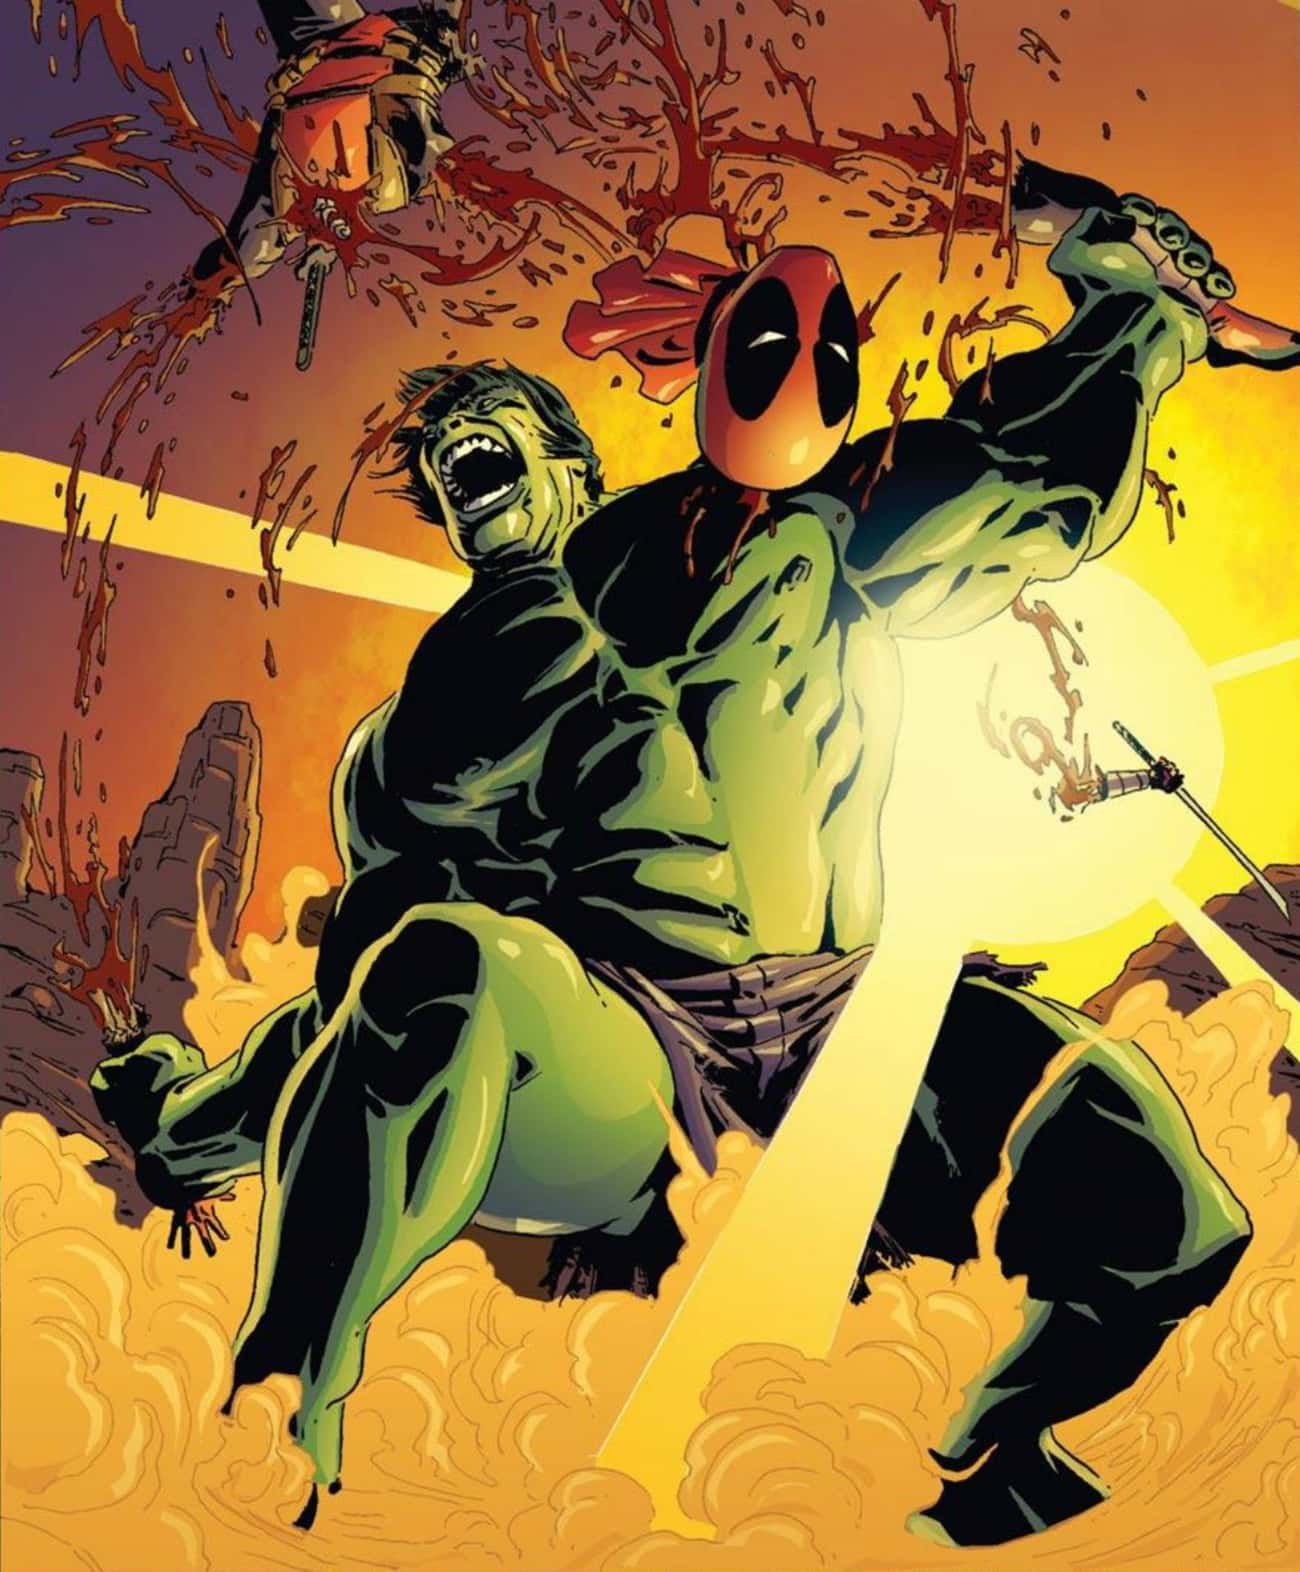 One Time Hulk Ripped Deadpool Apart